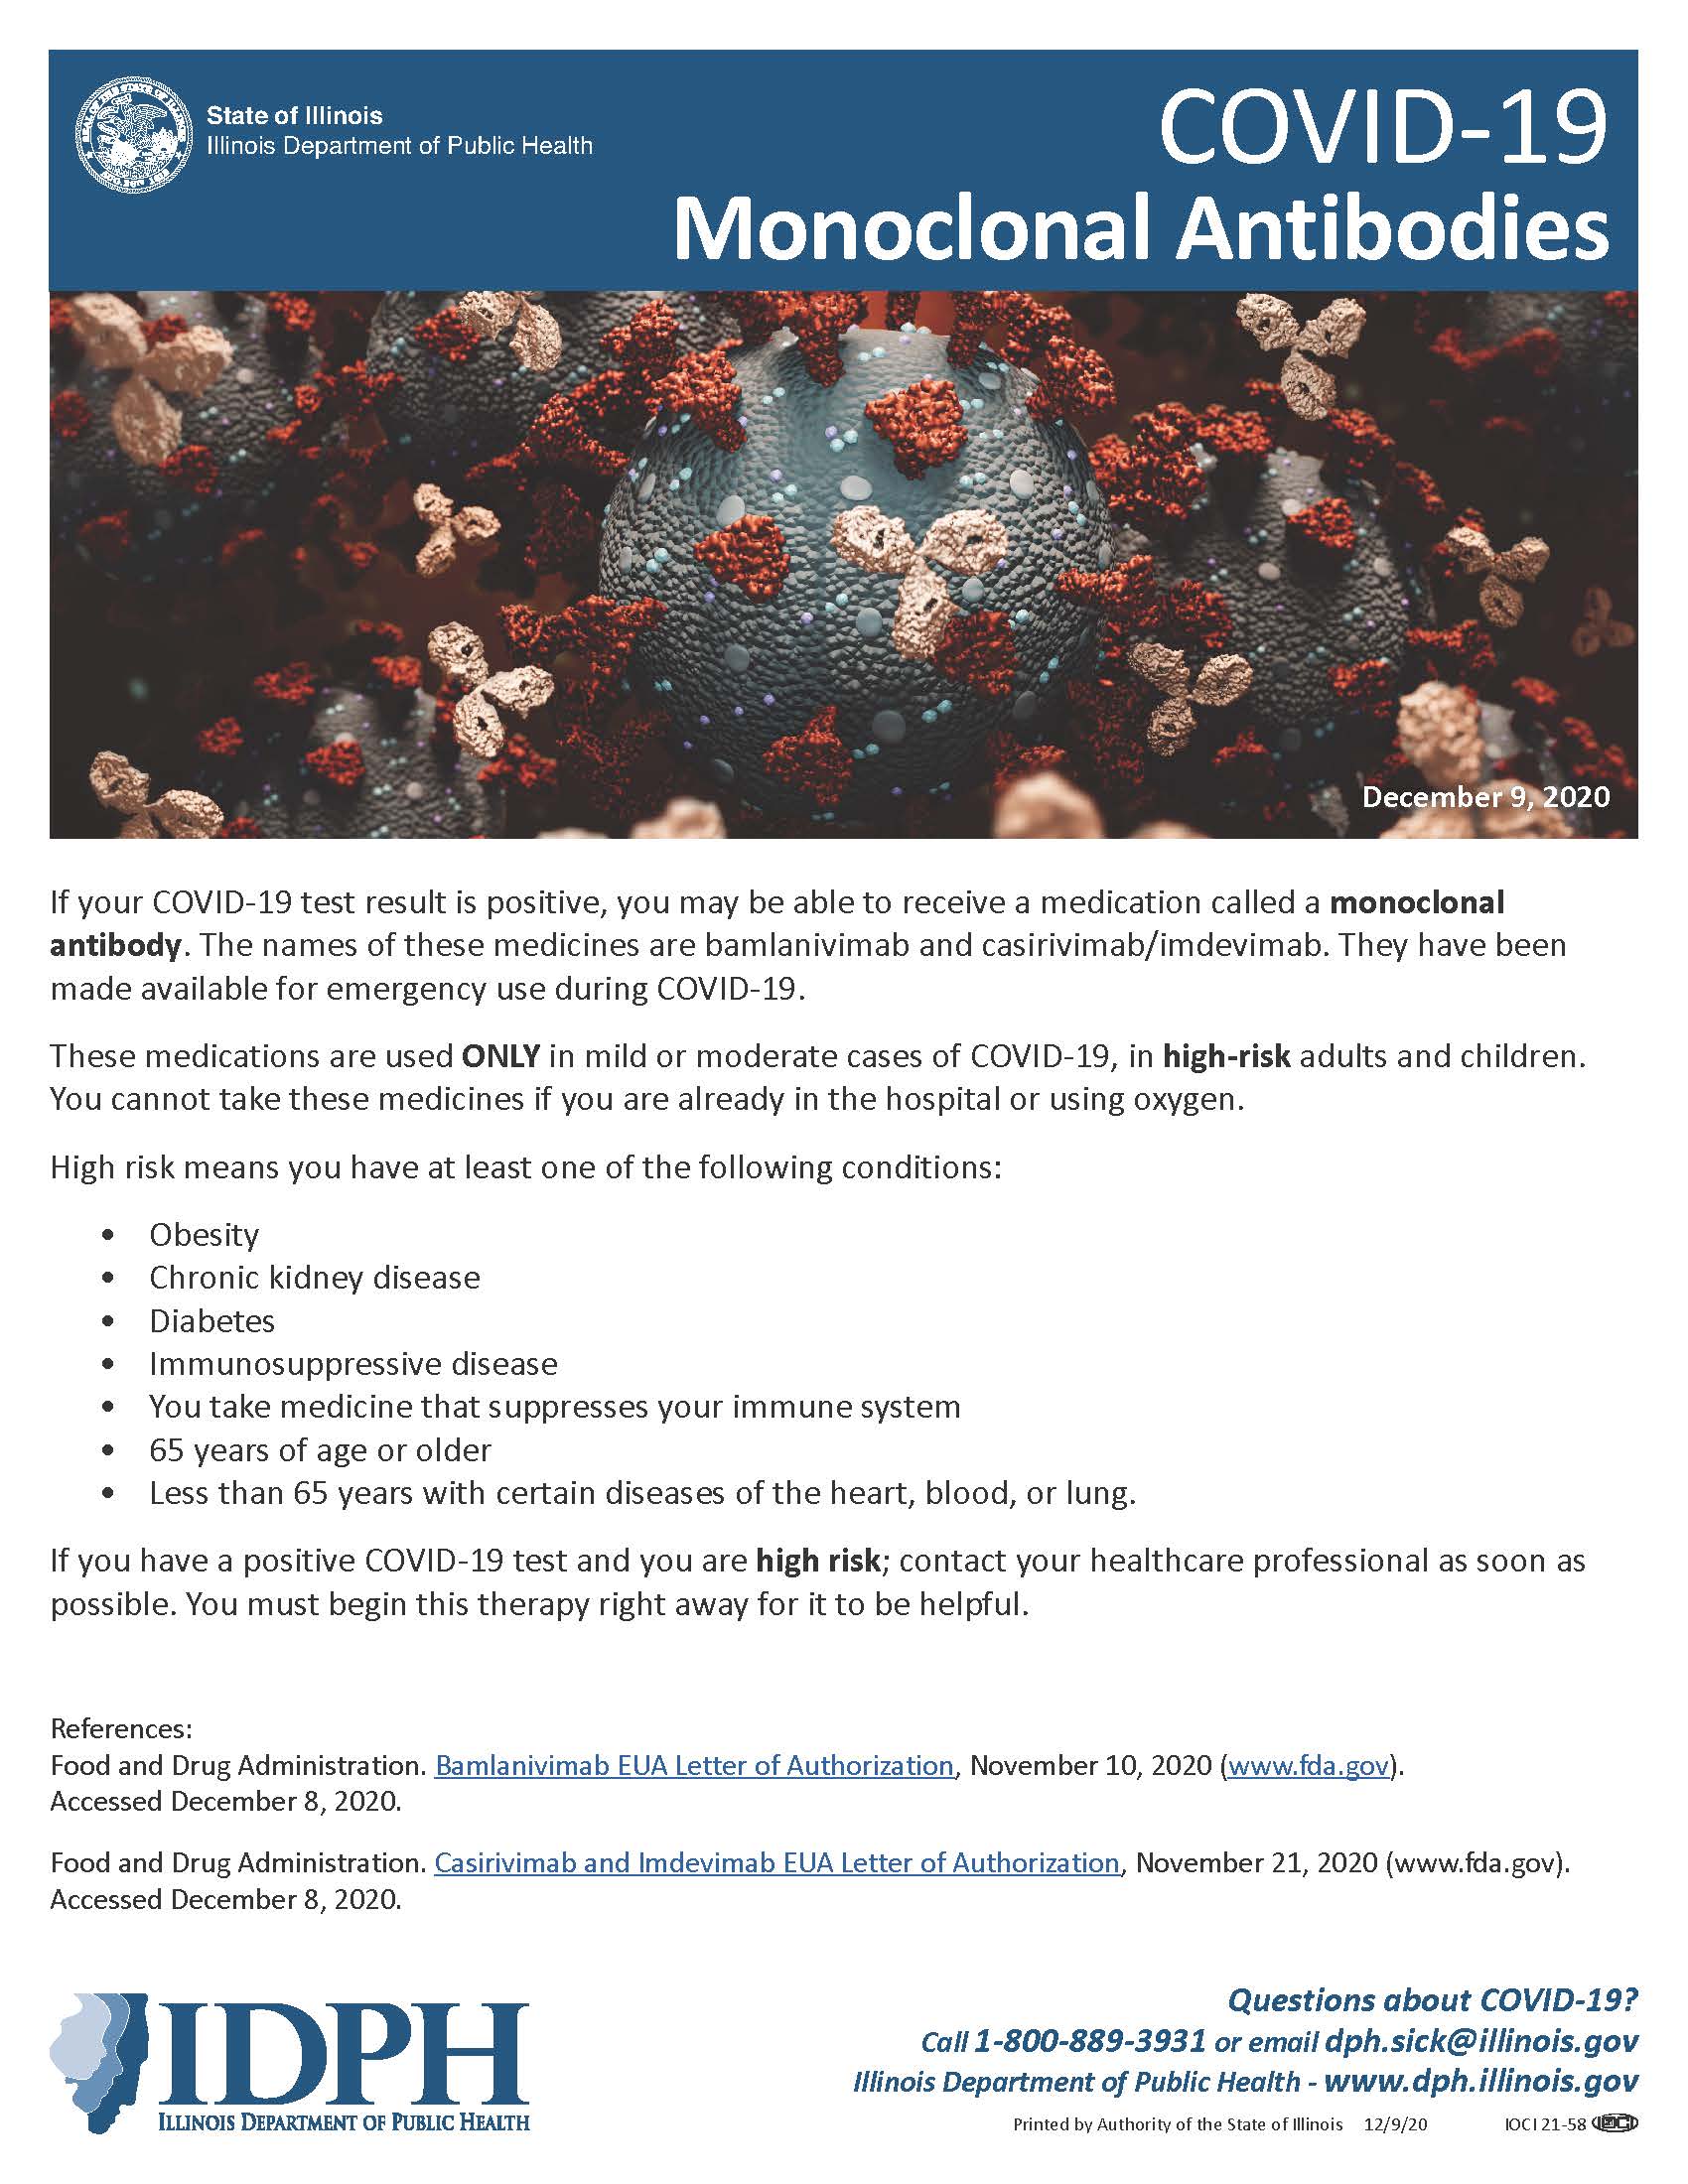 COVID-19 Monoclonal Antibodies InfoSheet